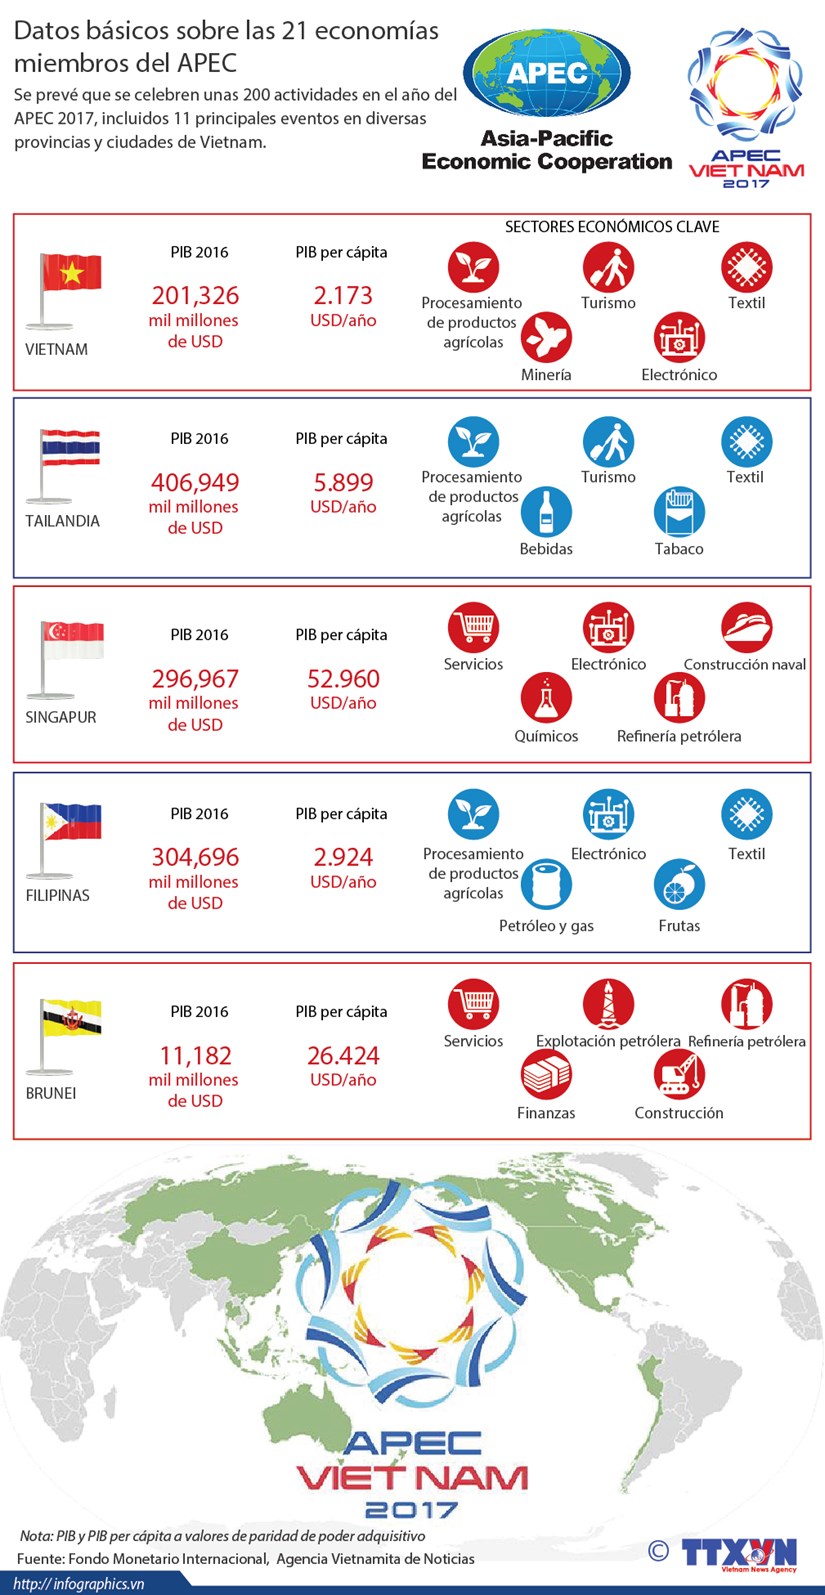 [Infografia] Datos basicos sobre las 21 economias miembros del APEC (parte 4) hinh anh 1